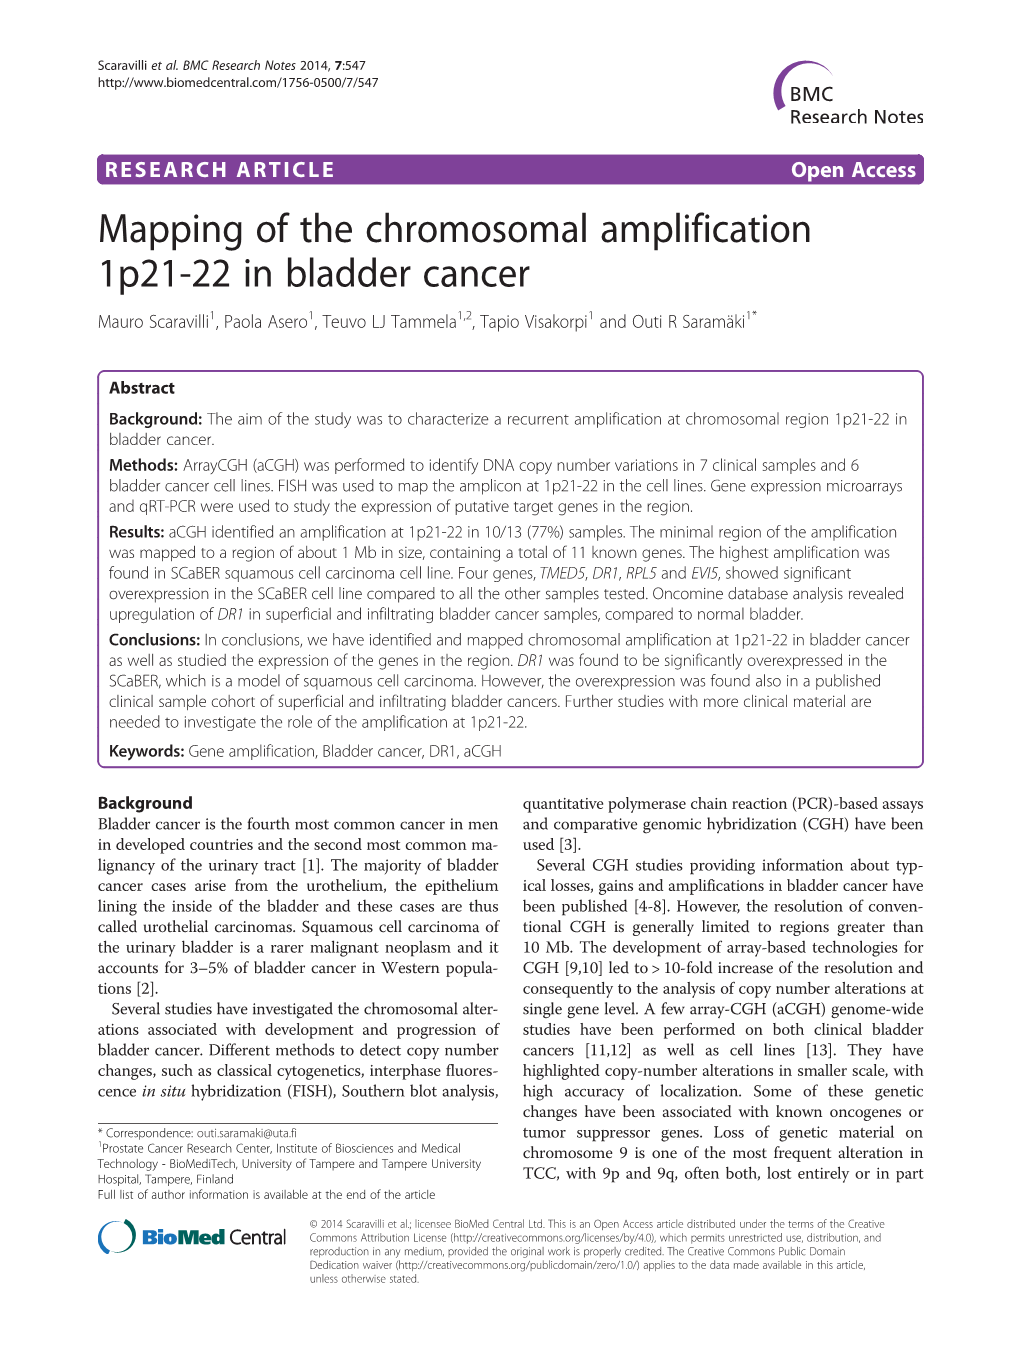 Mapping of the Chromosomal Amplification 1P21-22 in Bladder Cancer Mauro Scaravilli1, Paola Asero1, Teuvo LJ Tammela1,2, Tapio Visakorpi1 and Outi R Saramäki1*